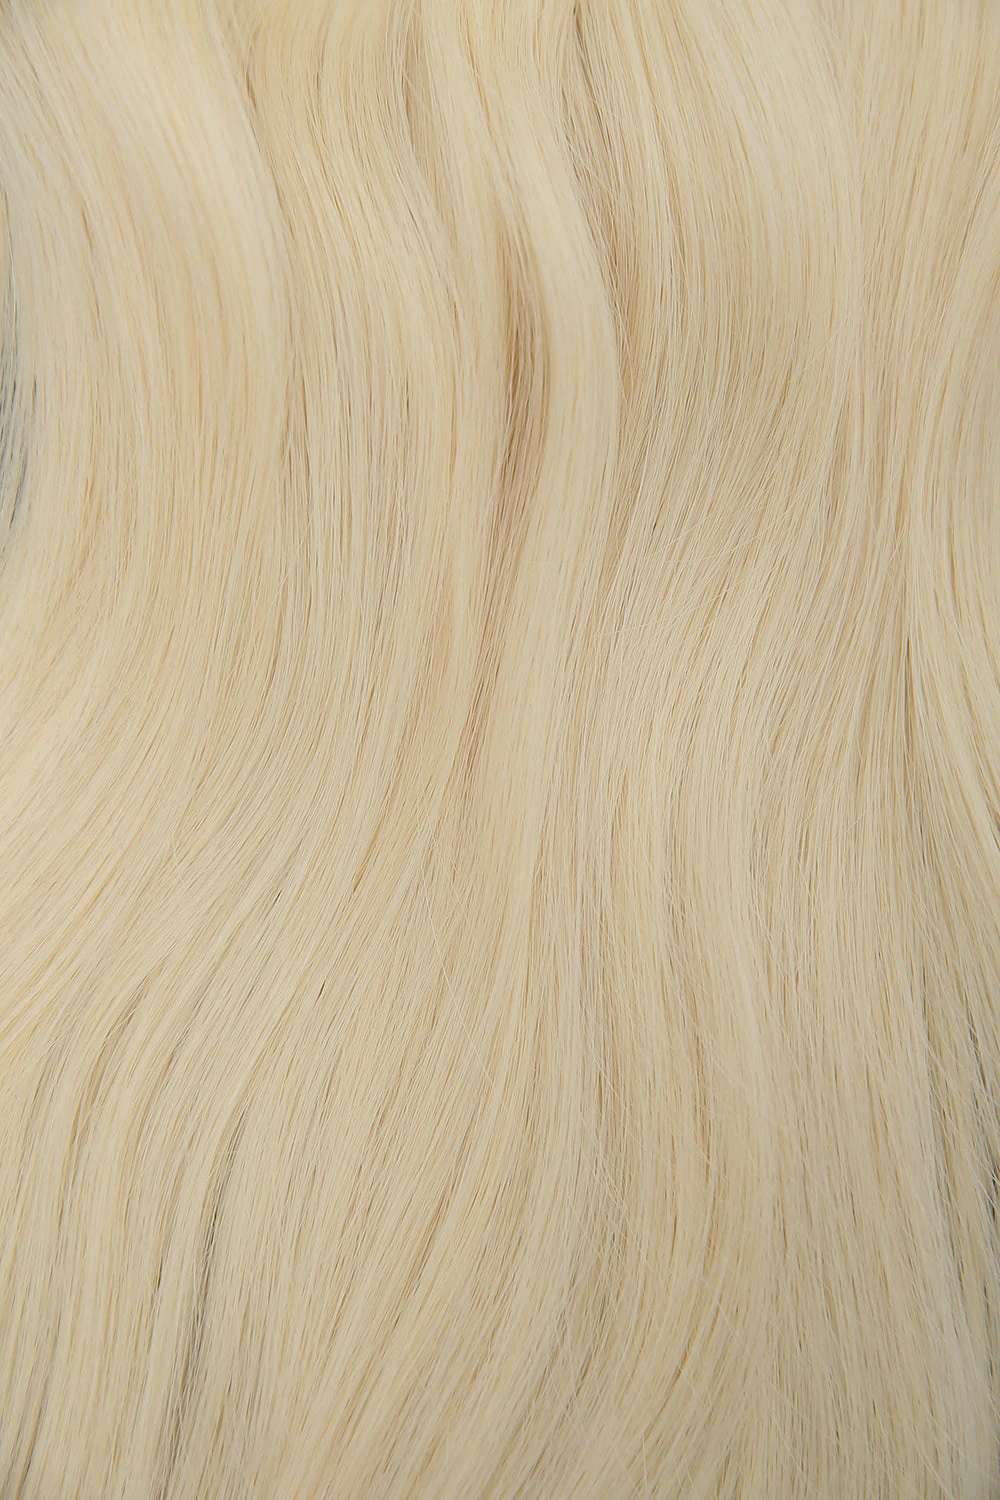 #613 Platinum Blonde Ponytail Extensions